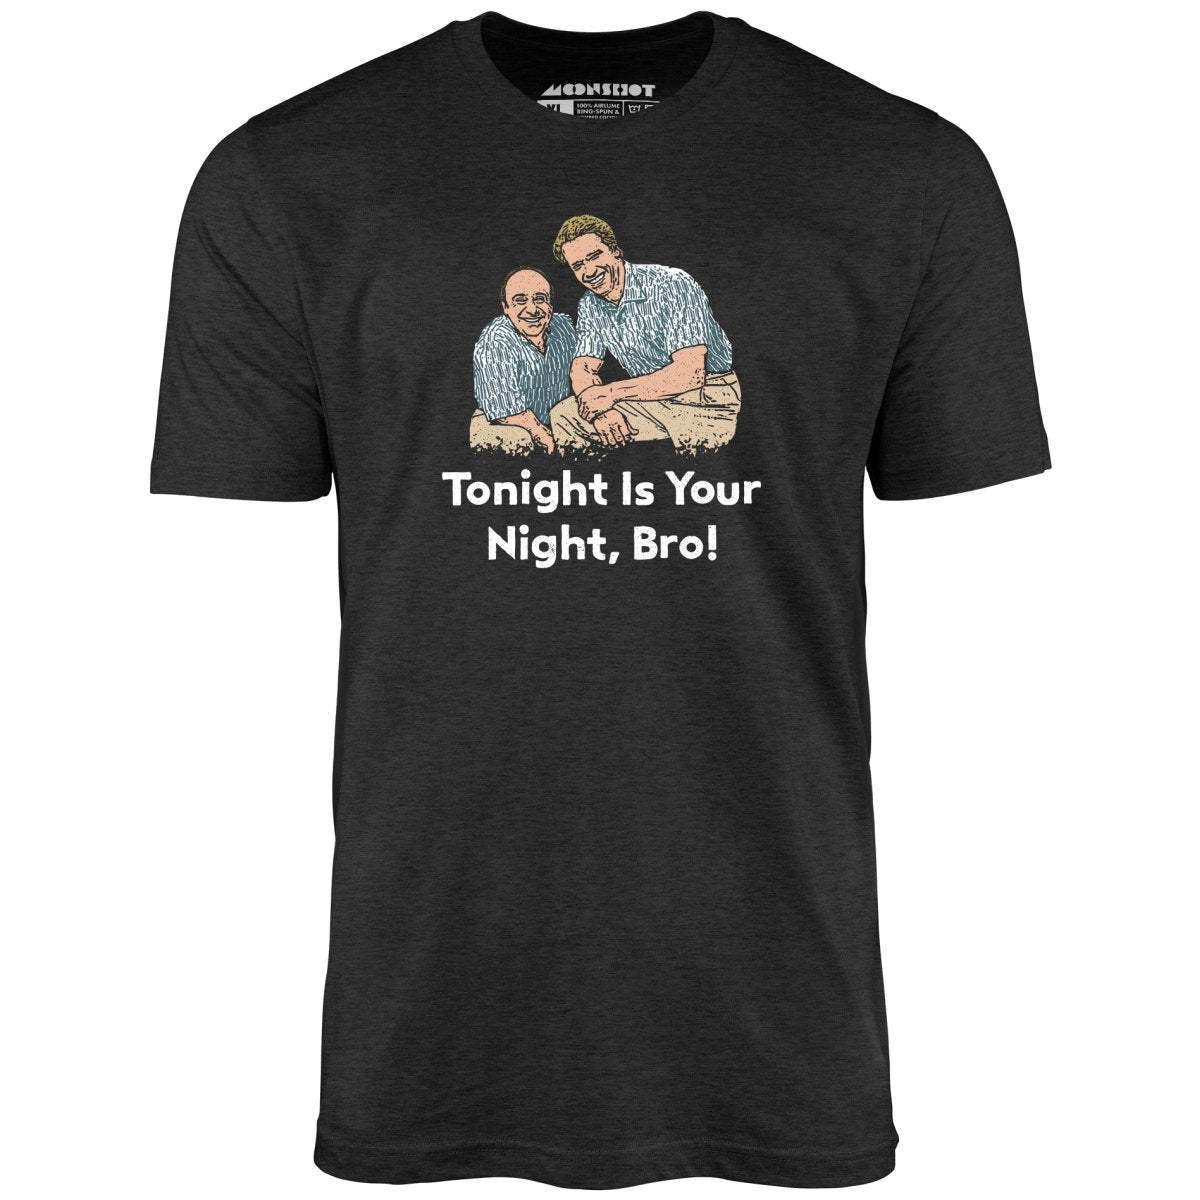 Tonight is Your Night, Bro! - Unisex T-Shirt